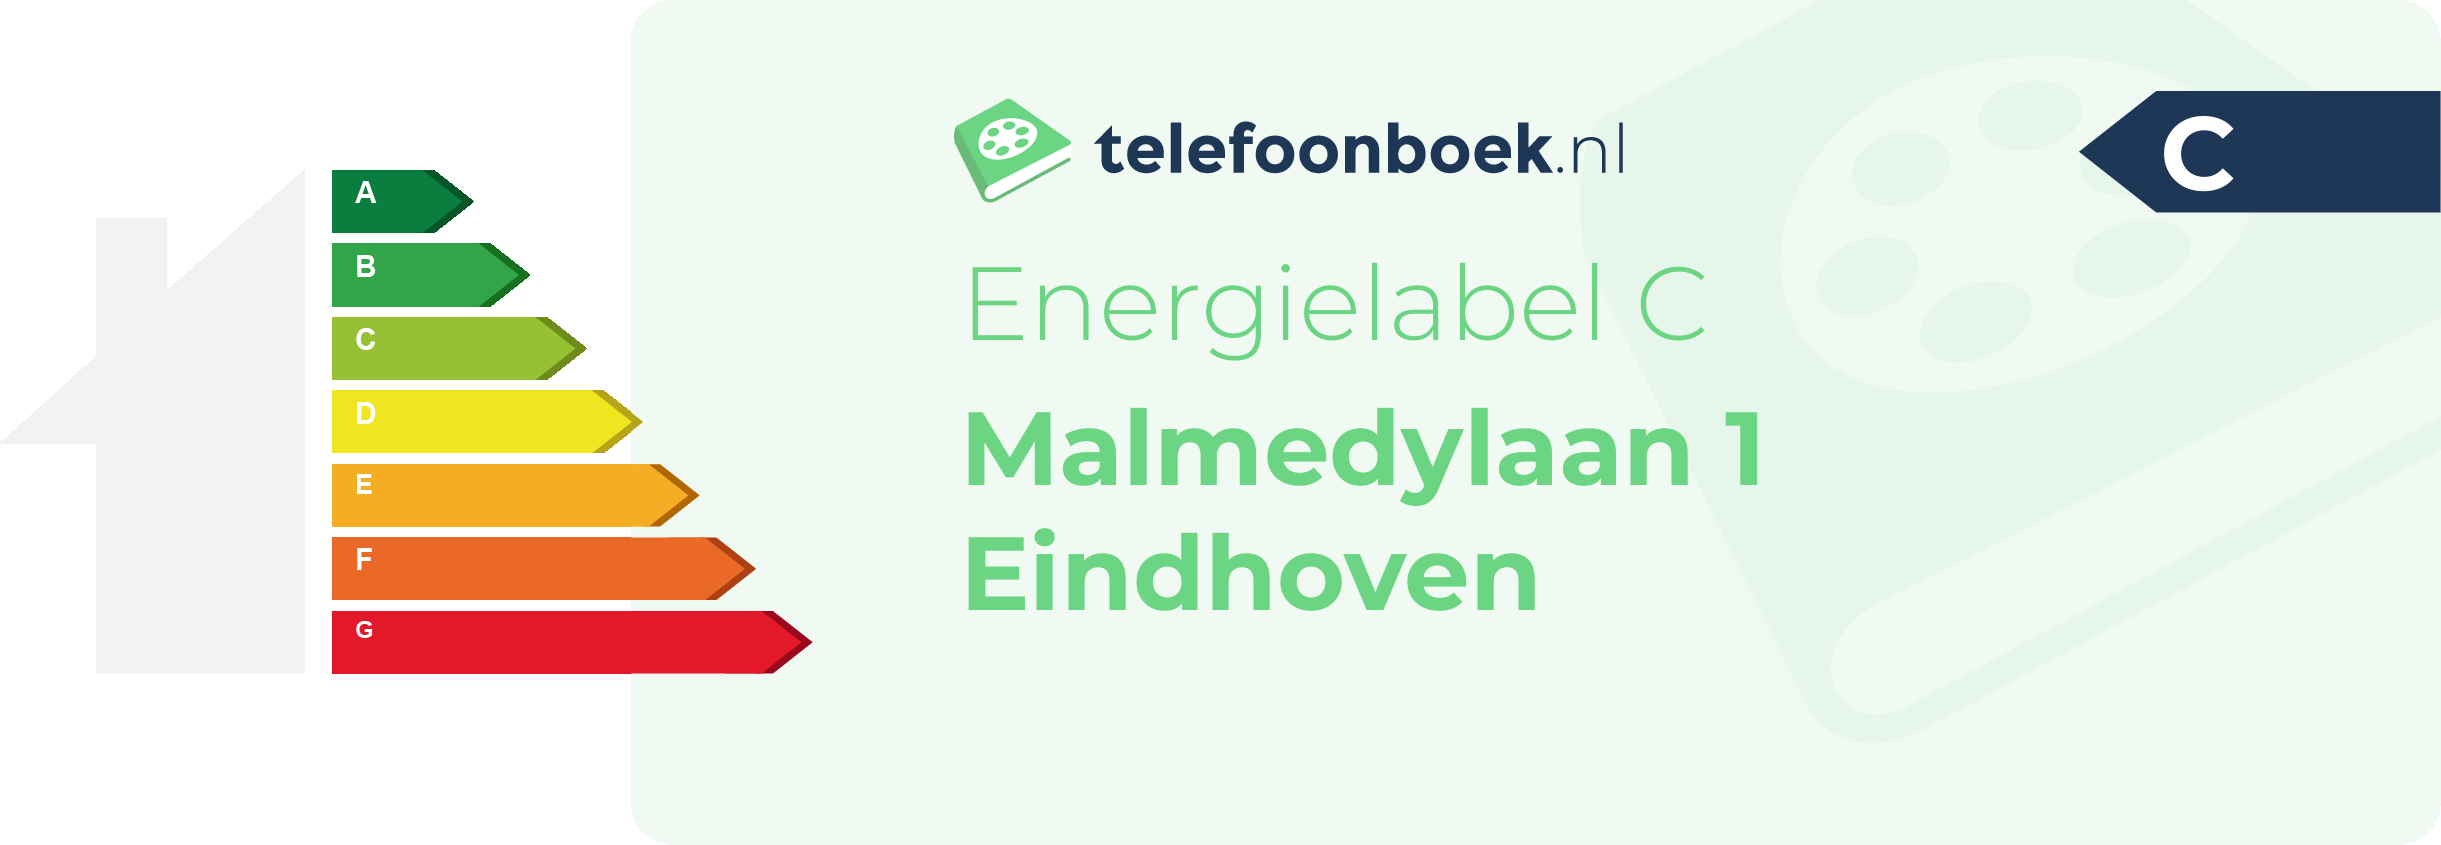 Energielabel Malmedylaan 1 Eindhoven